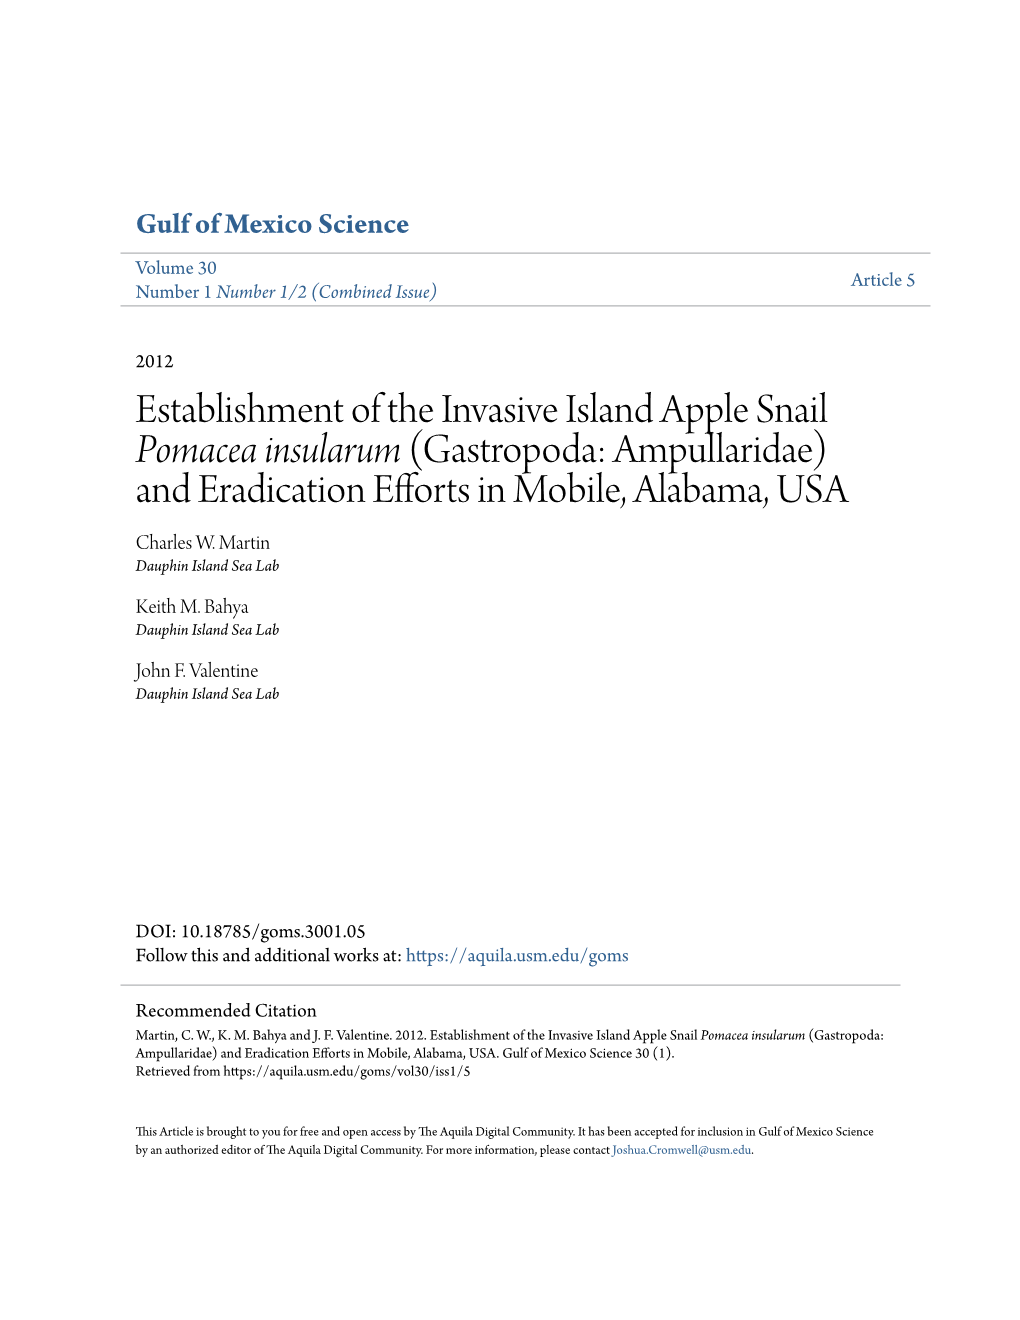 Establishment of the Invasive Island Apple Snail Pomacea Insularum (Gastropoda: Ampullaridae) and Eradication Efforts in Mobile, Alabama, USA Charles W